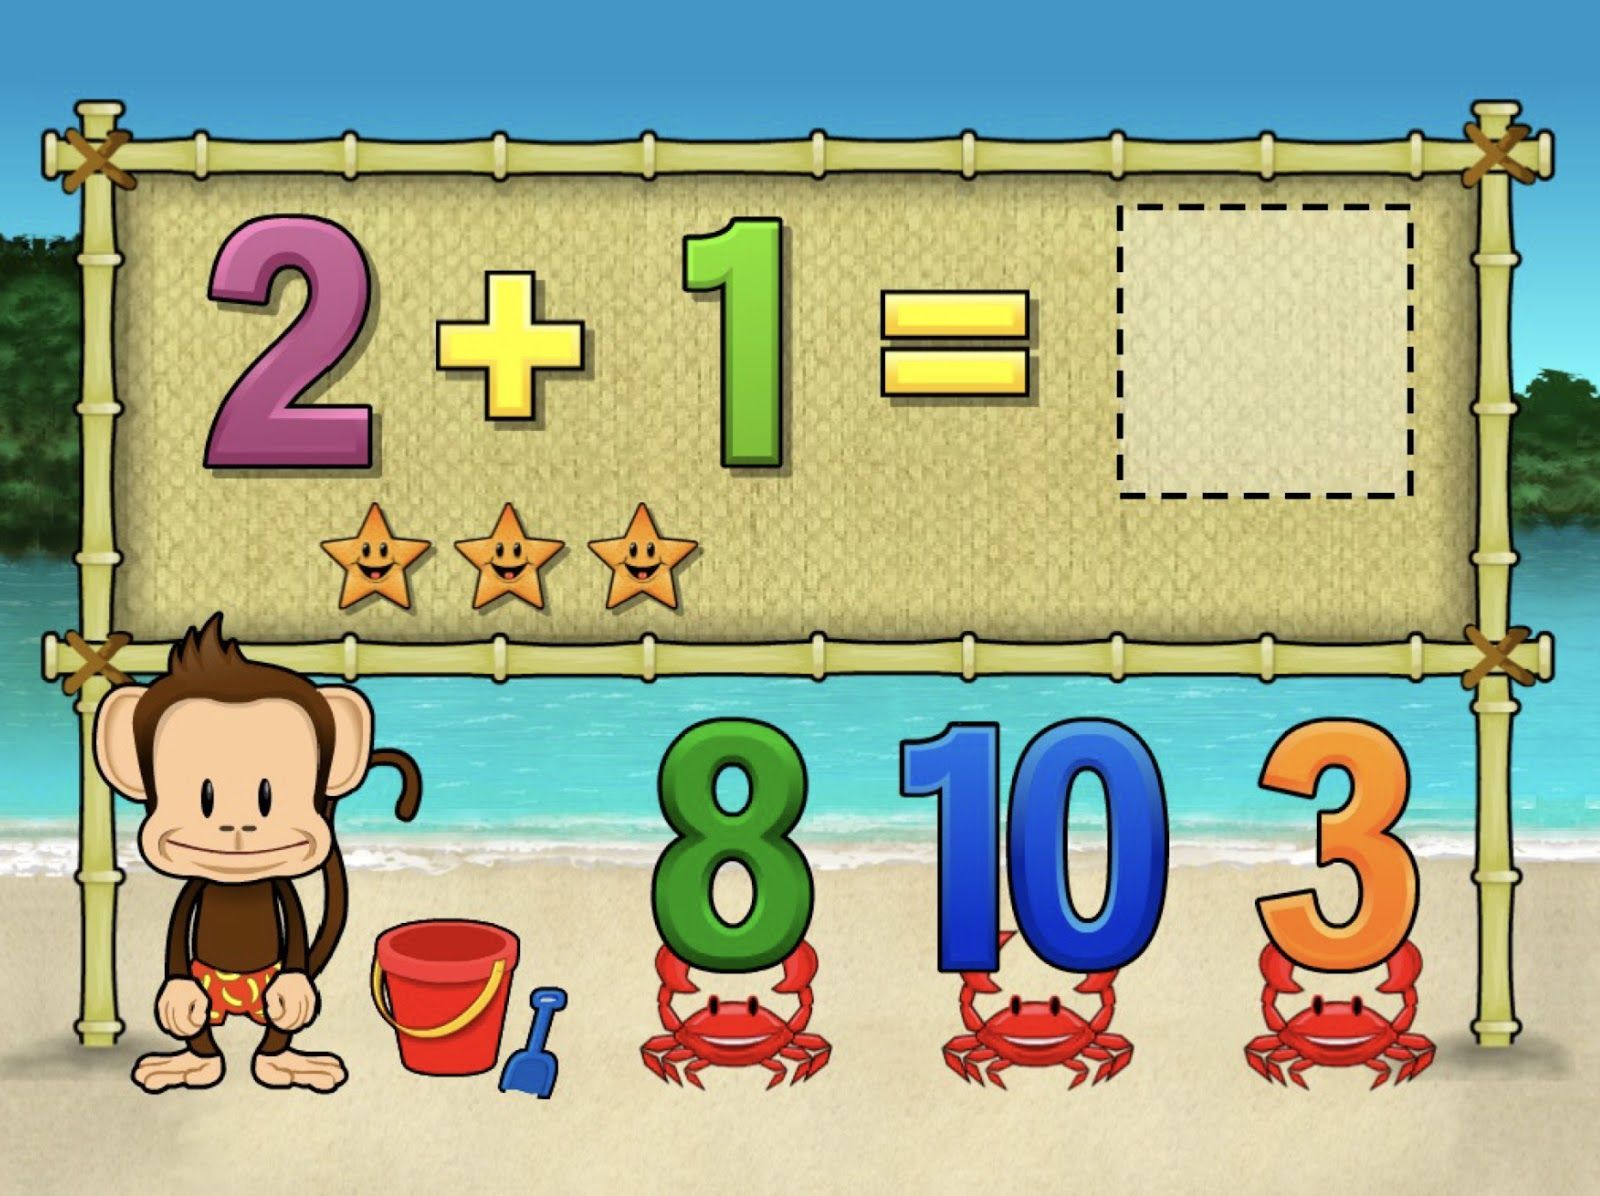 Best Math Apps For Kindergarten